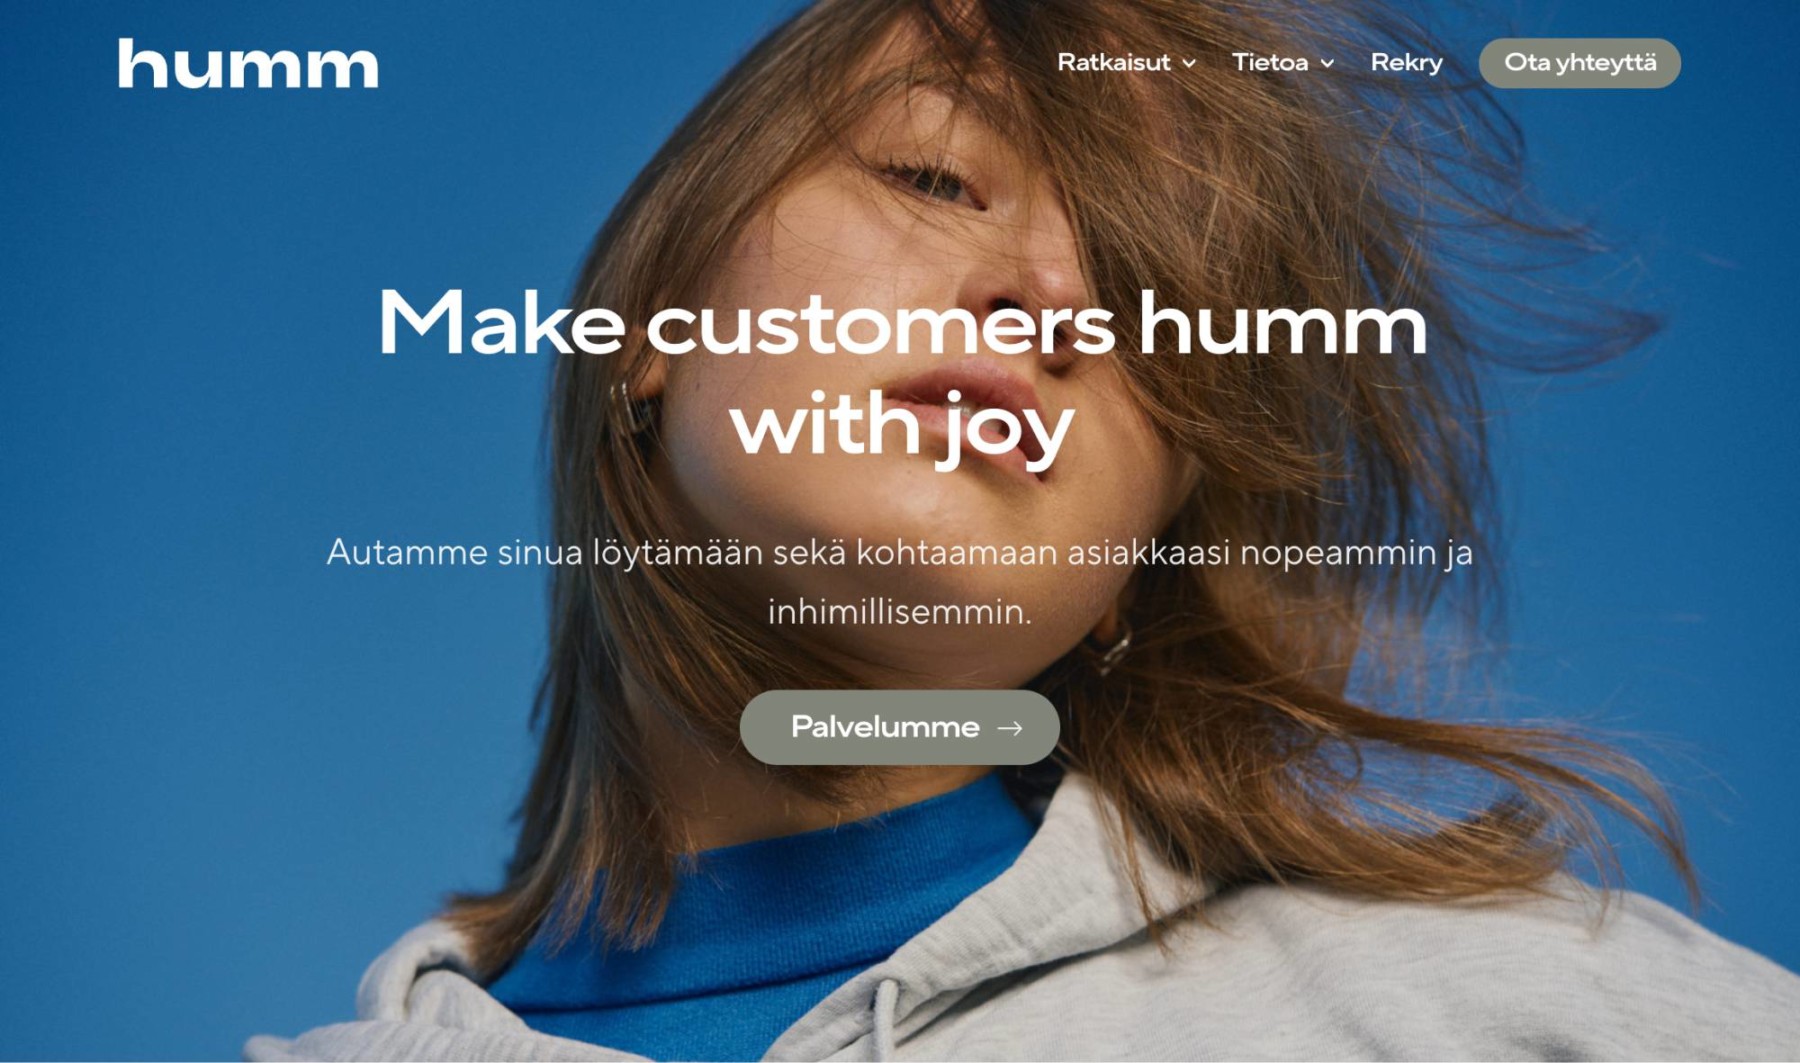 Humm.fi - etusivu - "Make customers humm with joy"